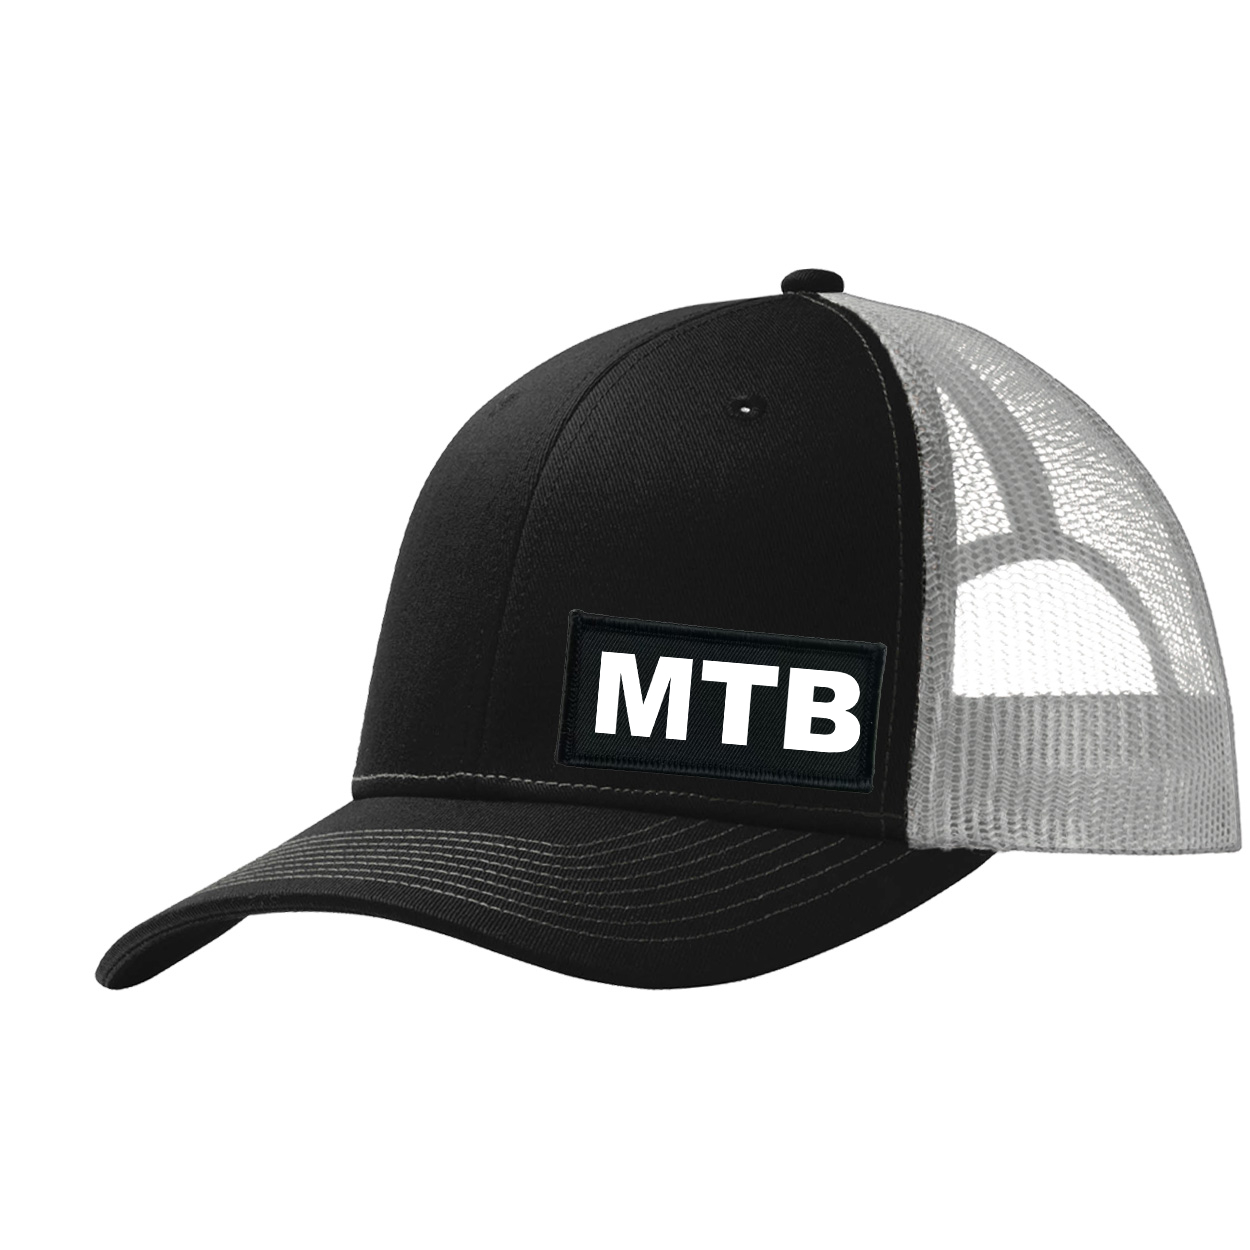 MTB Brand Logo Night Out Woven Patch Snapback Trucker Hat Black/Gray